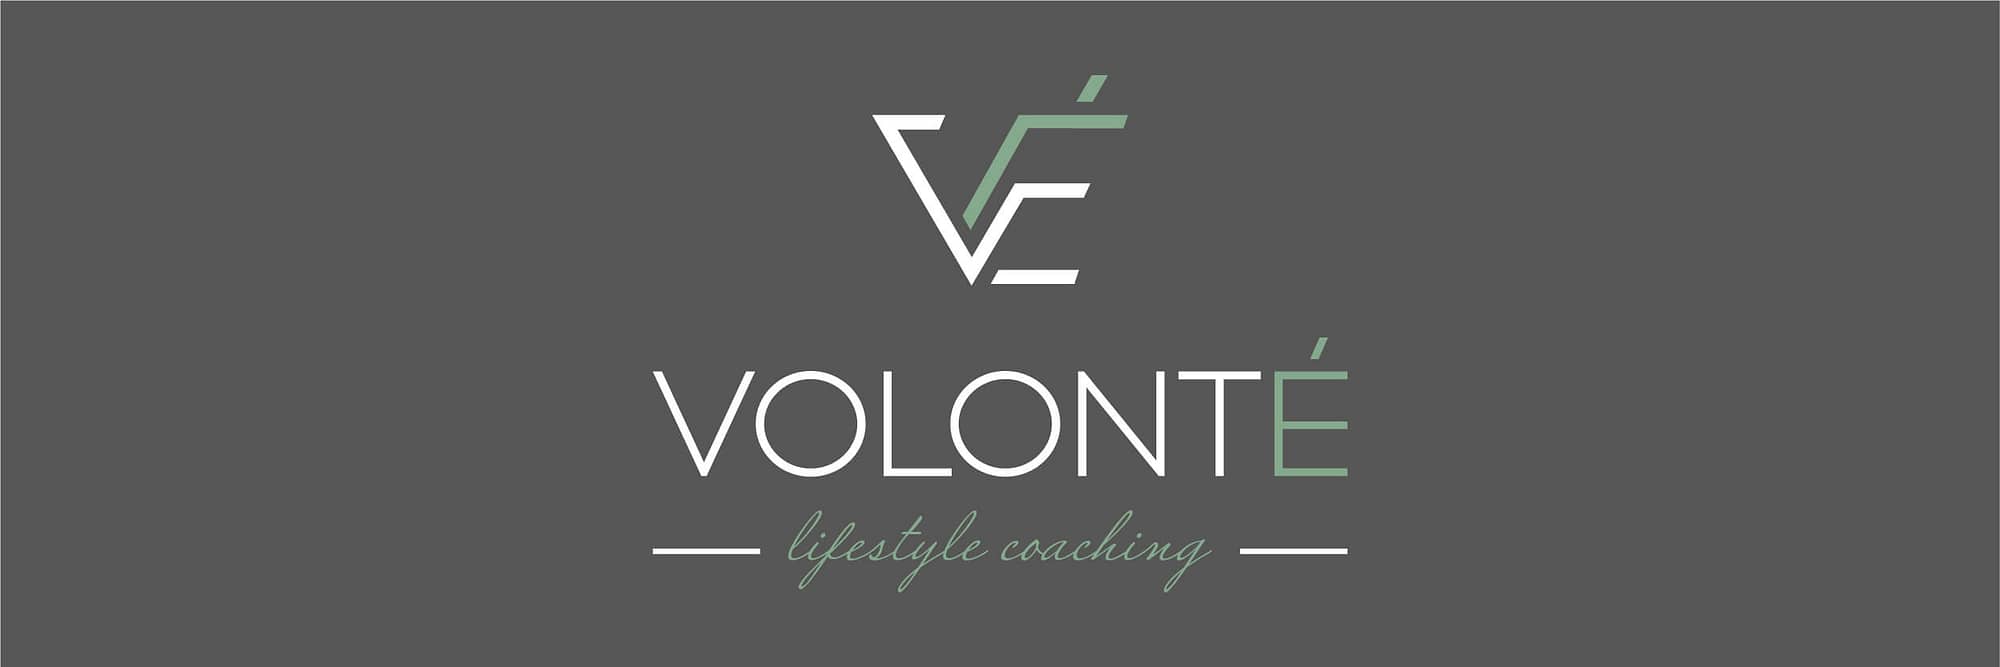 lifestyle coaching logo ontwerp